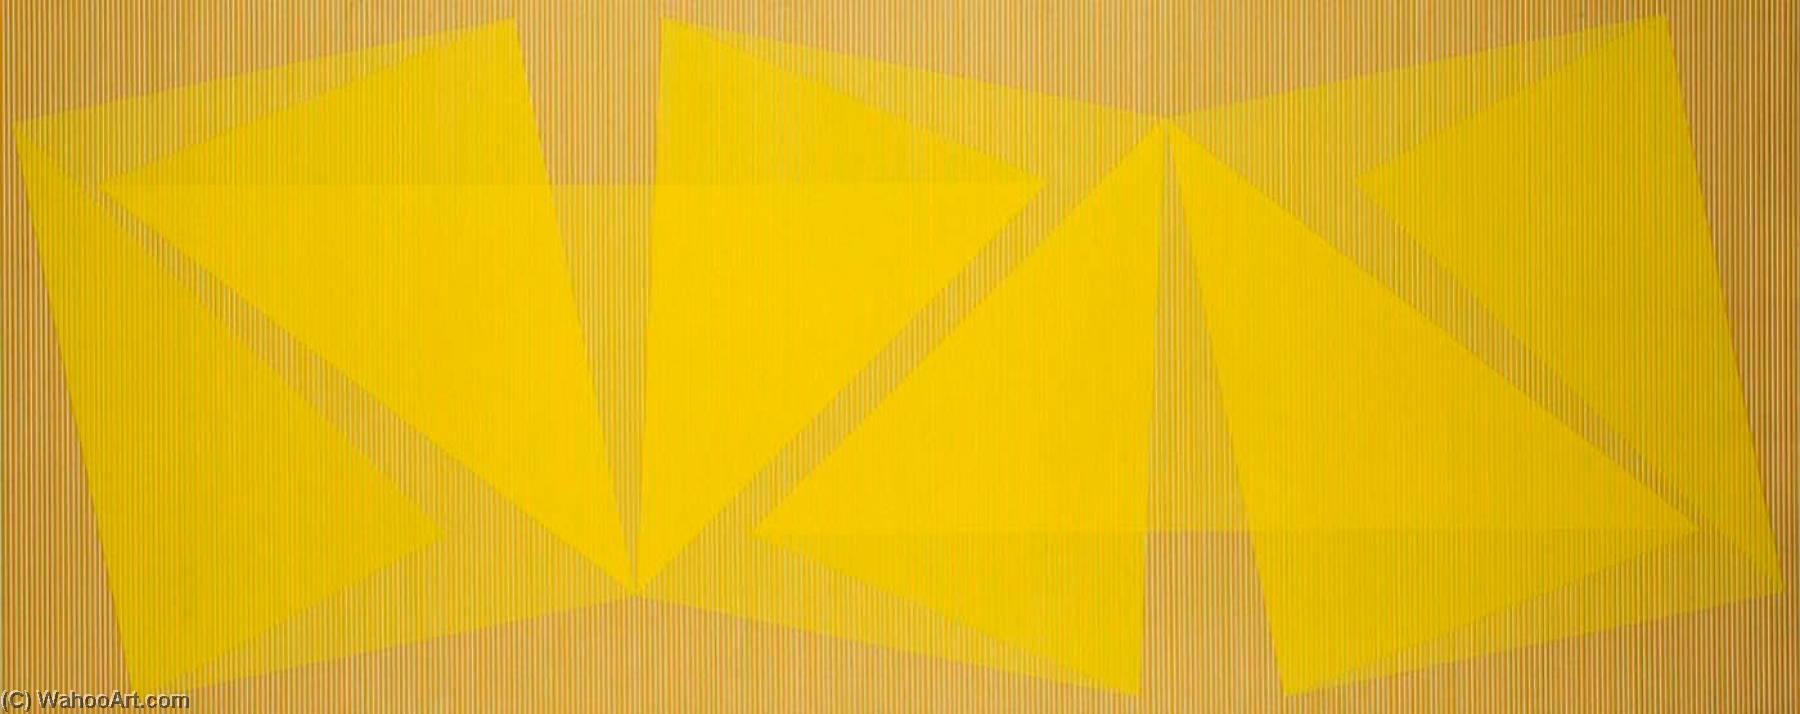 Rectangular Fold in Yellow, 1971 by Julian Stanczak (1928-2017, Poland) Julian Stanczak | ArtsDot.com